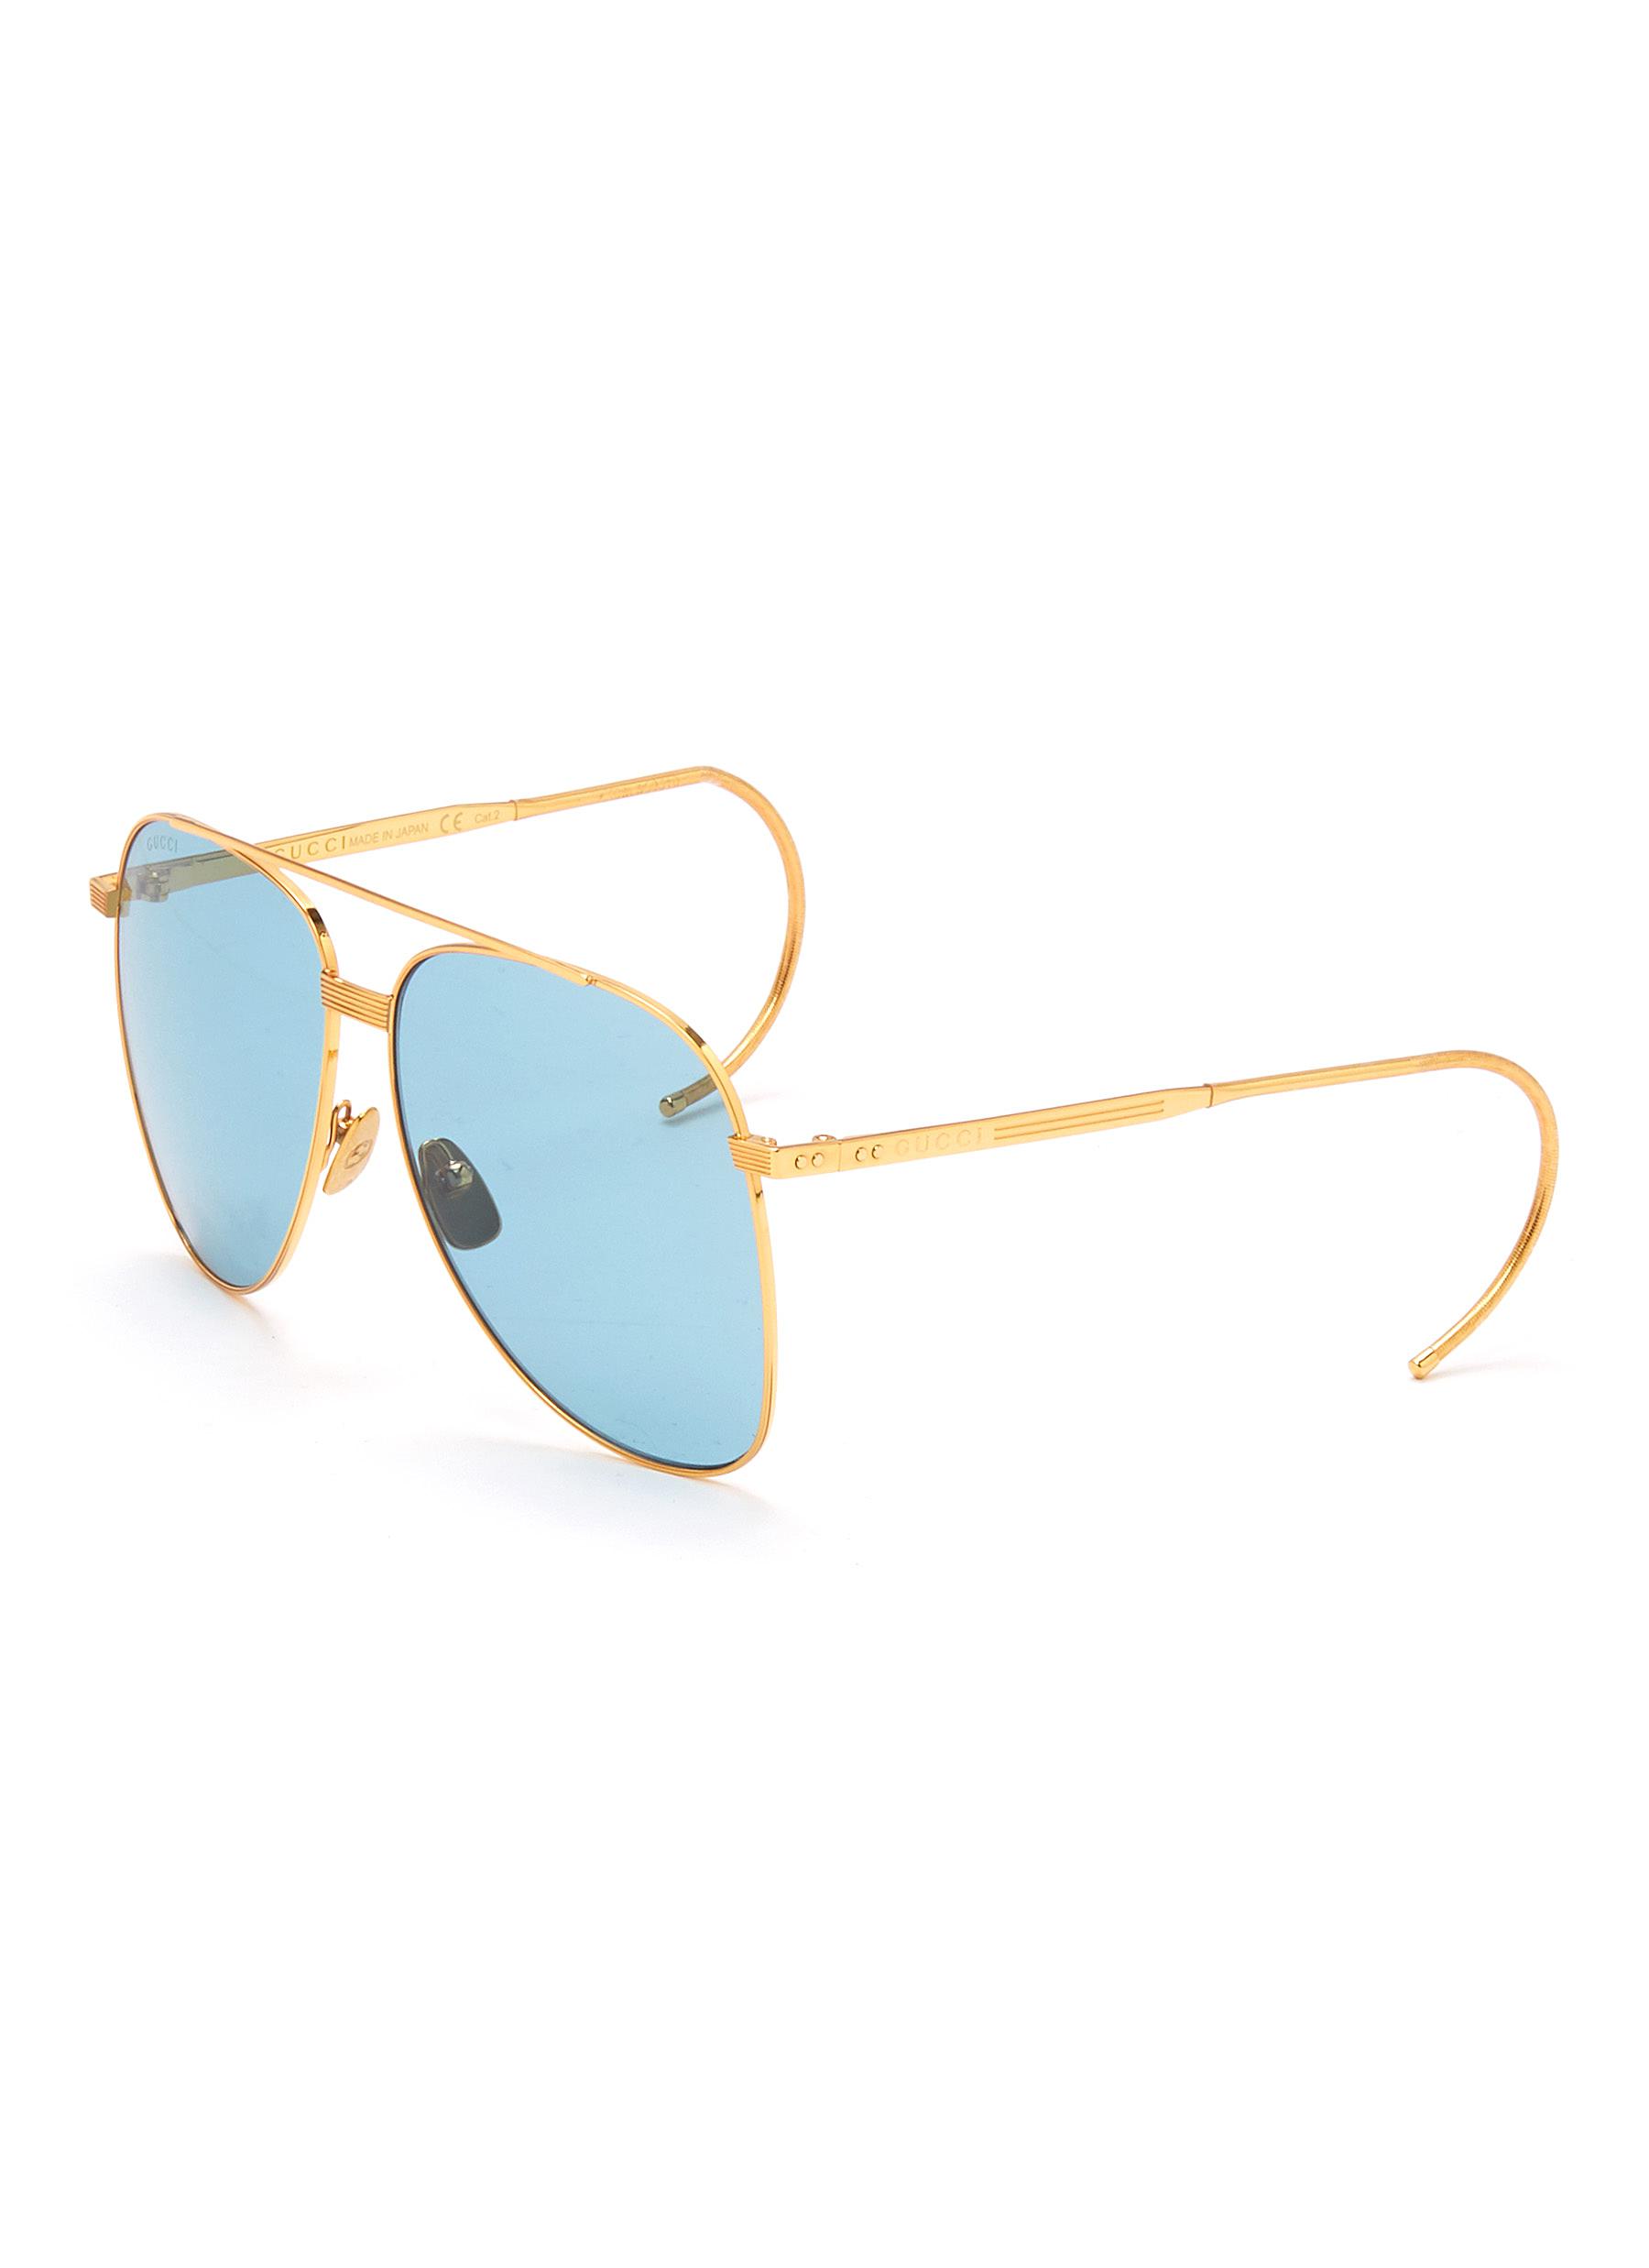 gucci metal frame sunglasses